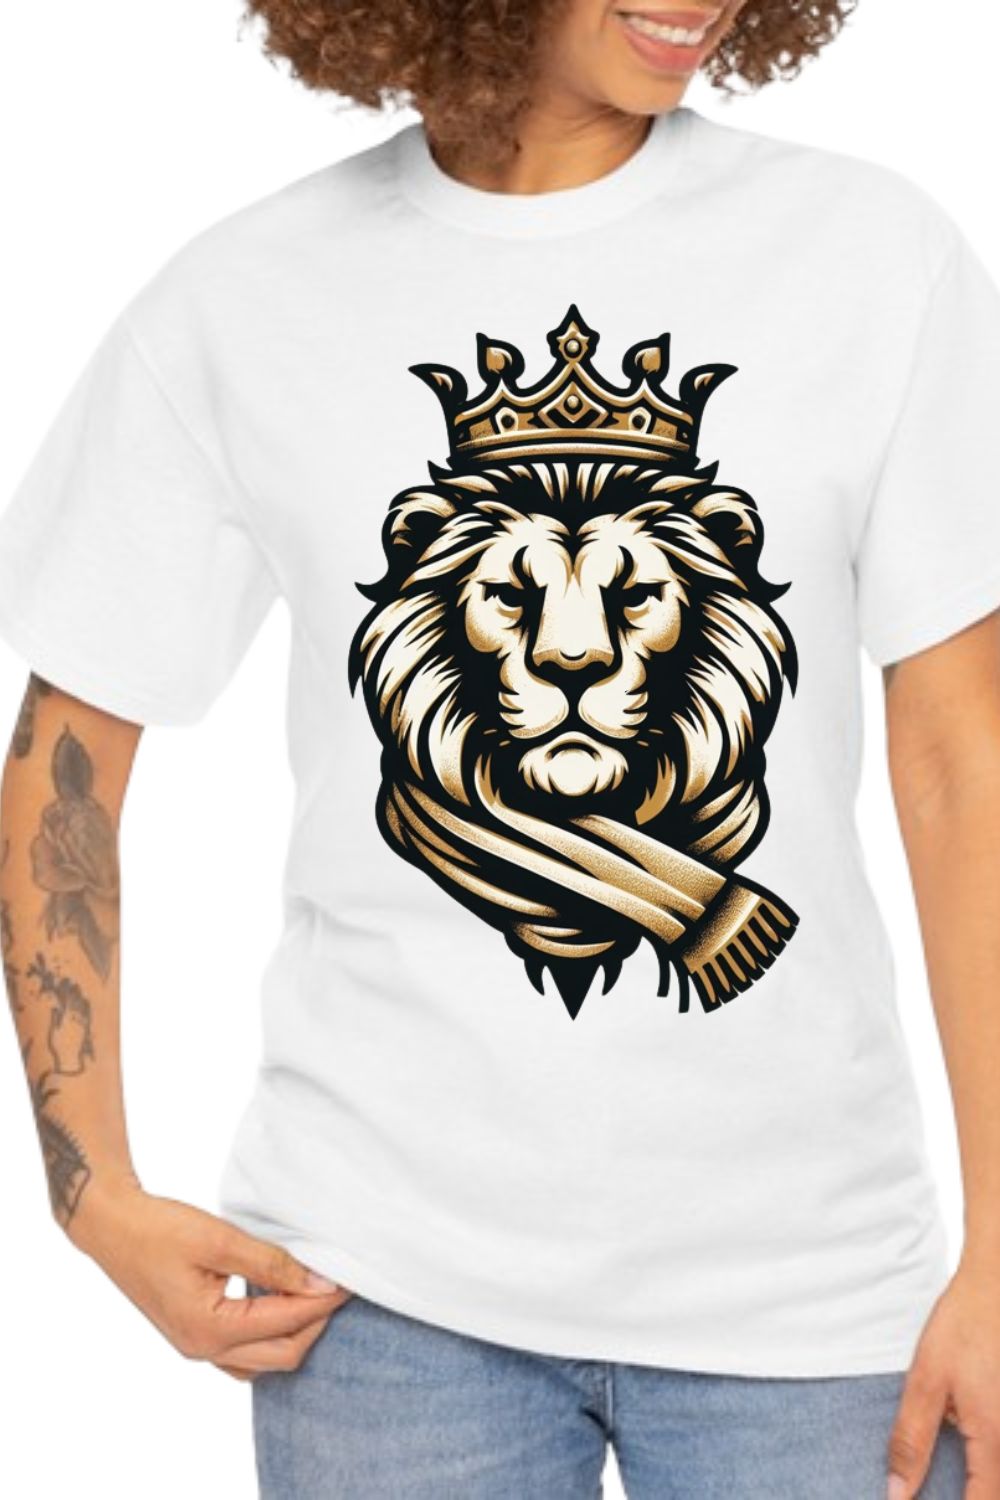 King lion design pinterest preview image.